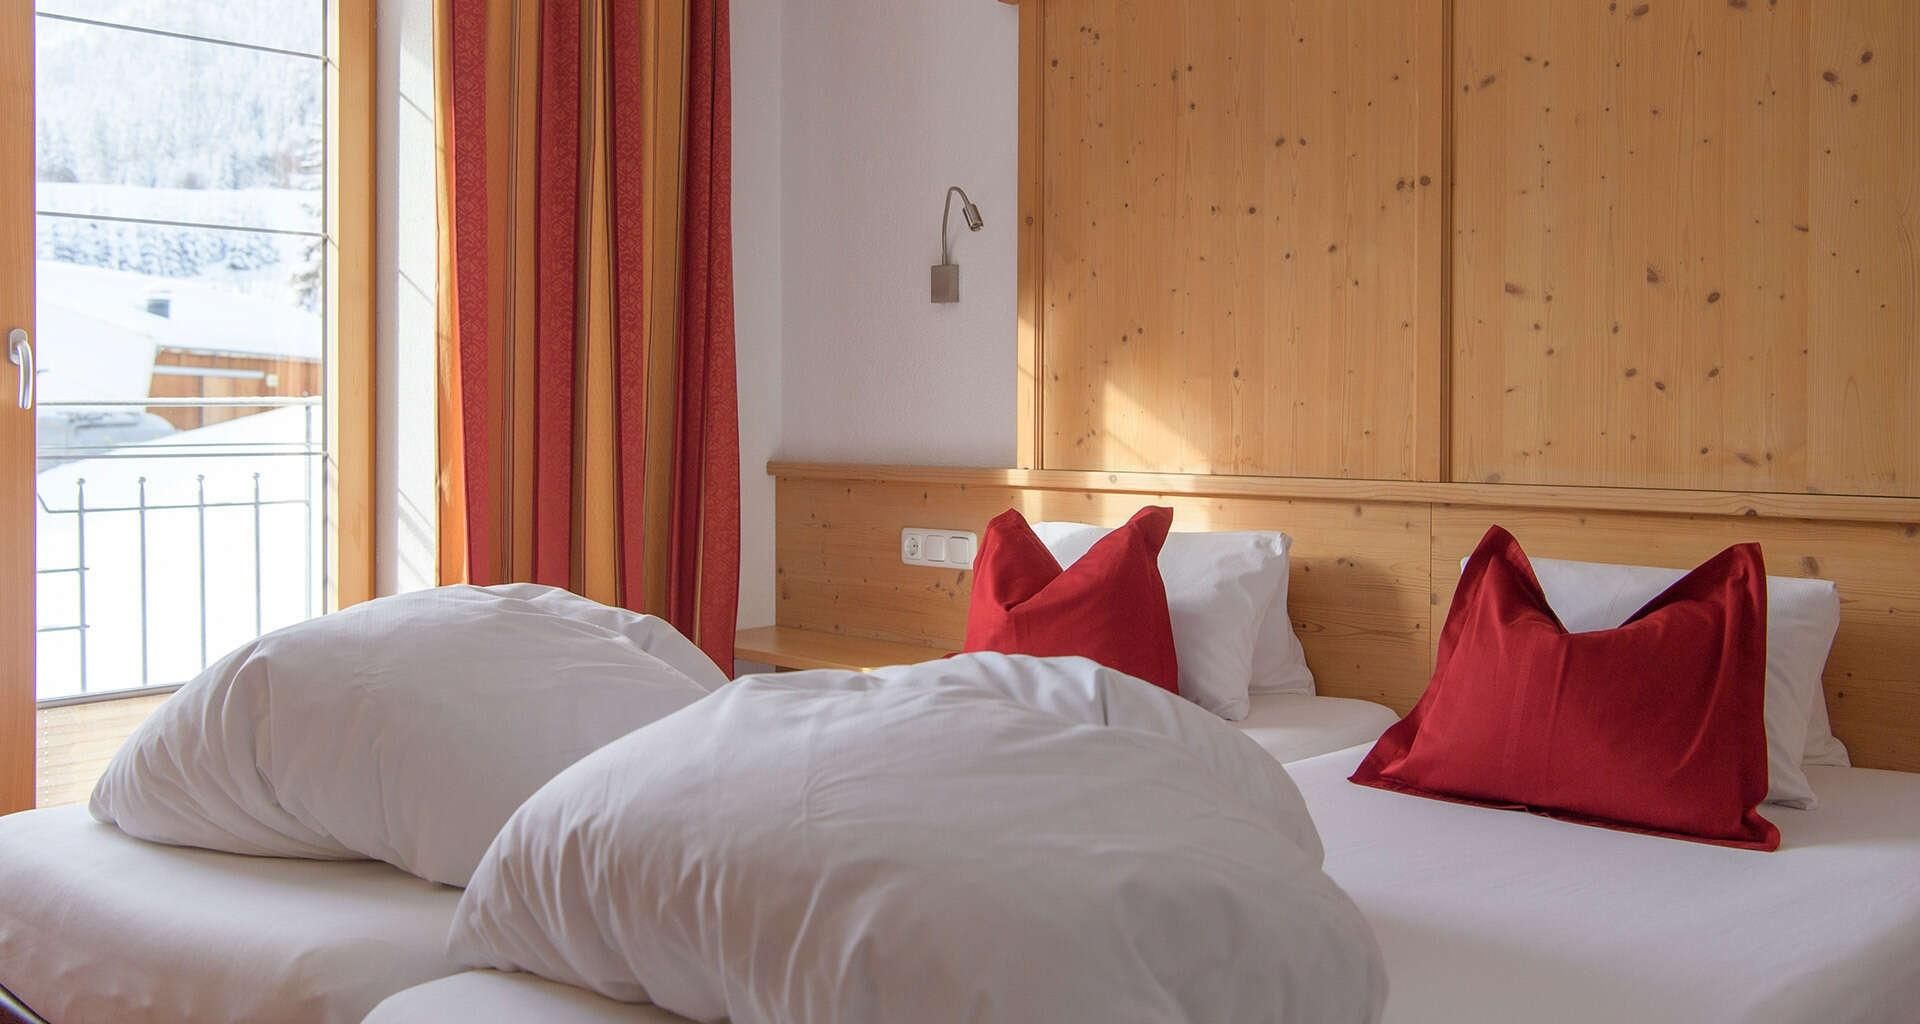 Rooms in the Hotel Garni Bacherhof in St Anton am Arlberg